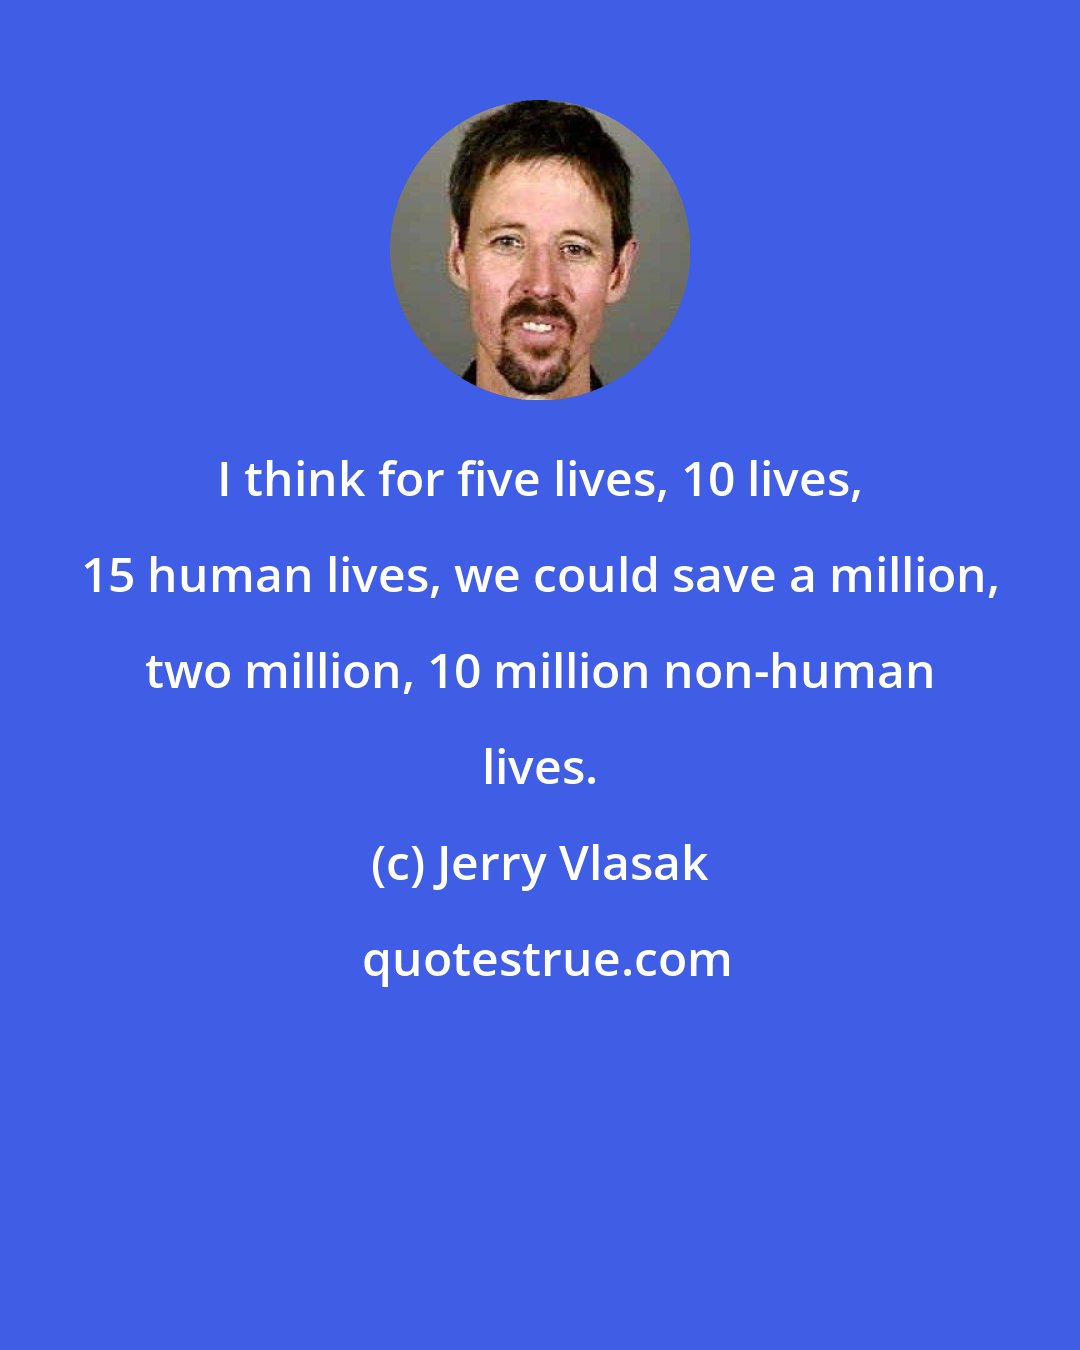 Jerry Vlasak: I think for five lives, 10 lives, 15 human lives, we could save a million, two million, 10 million non-human lives.